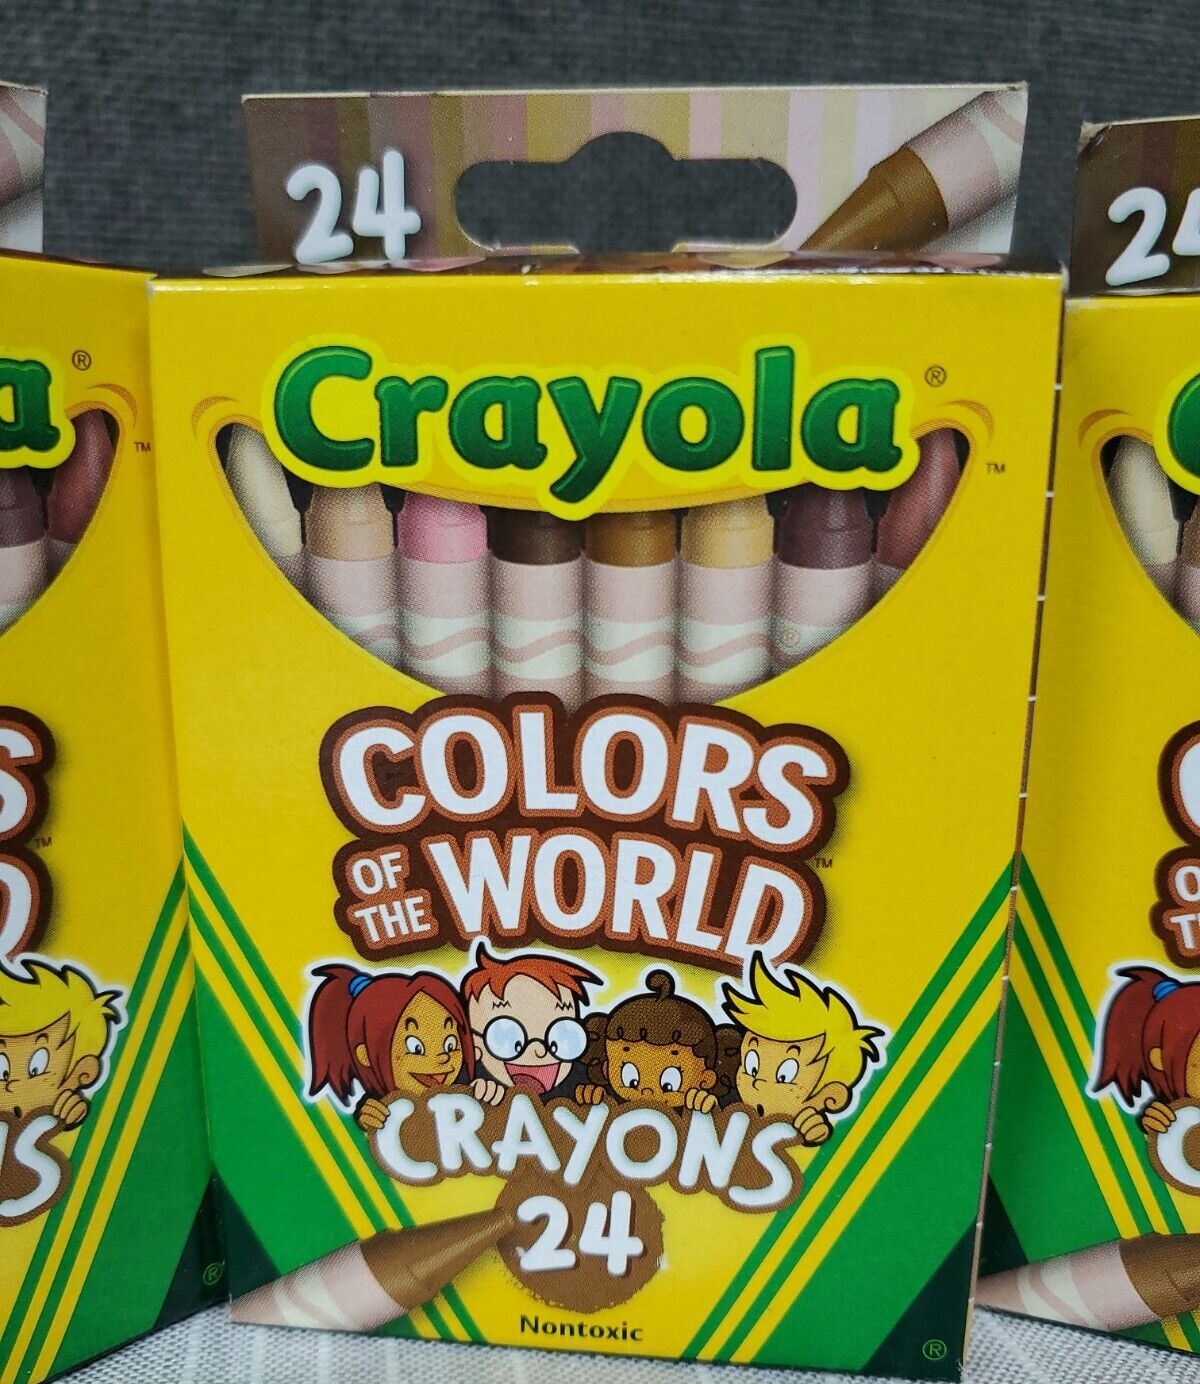 24-Pack Crayola Crayons